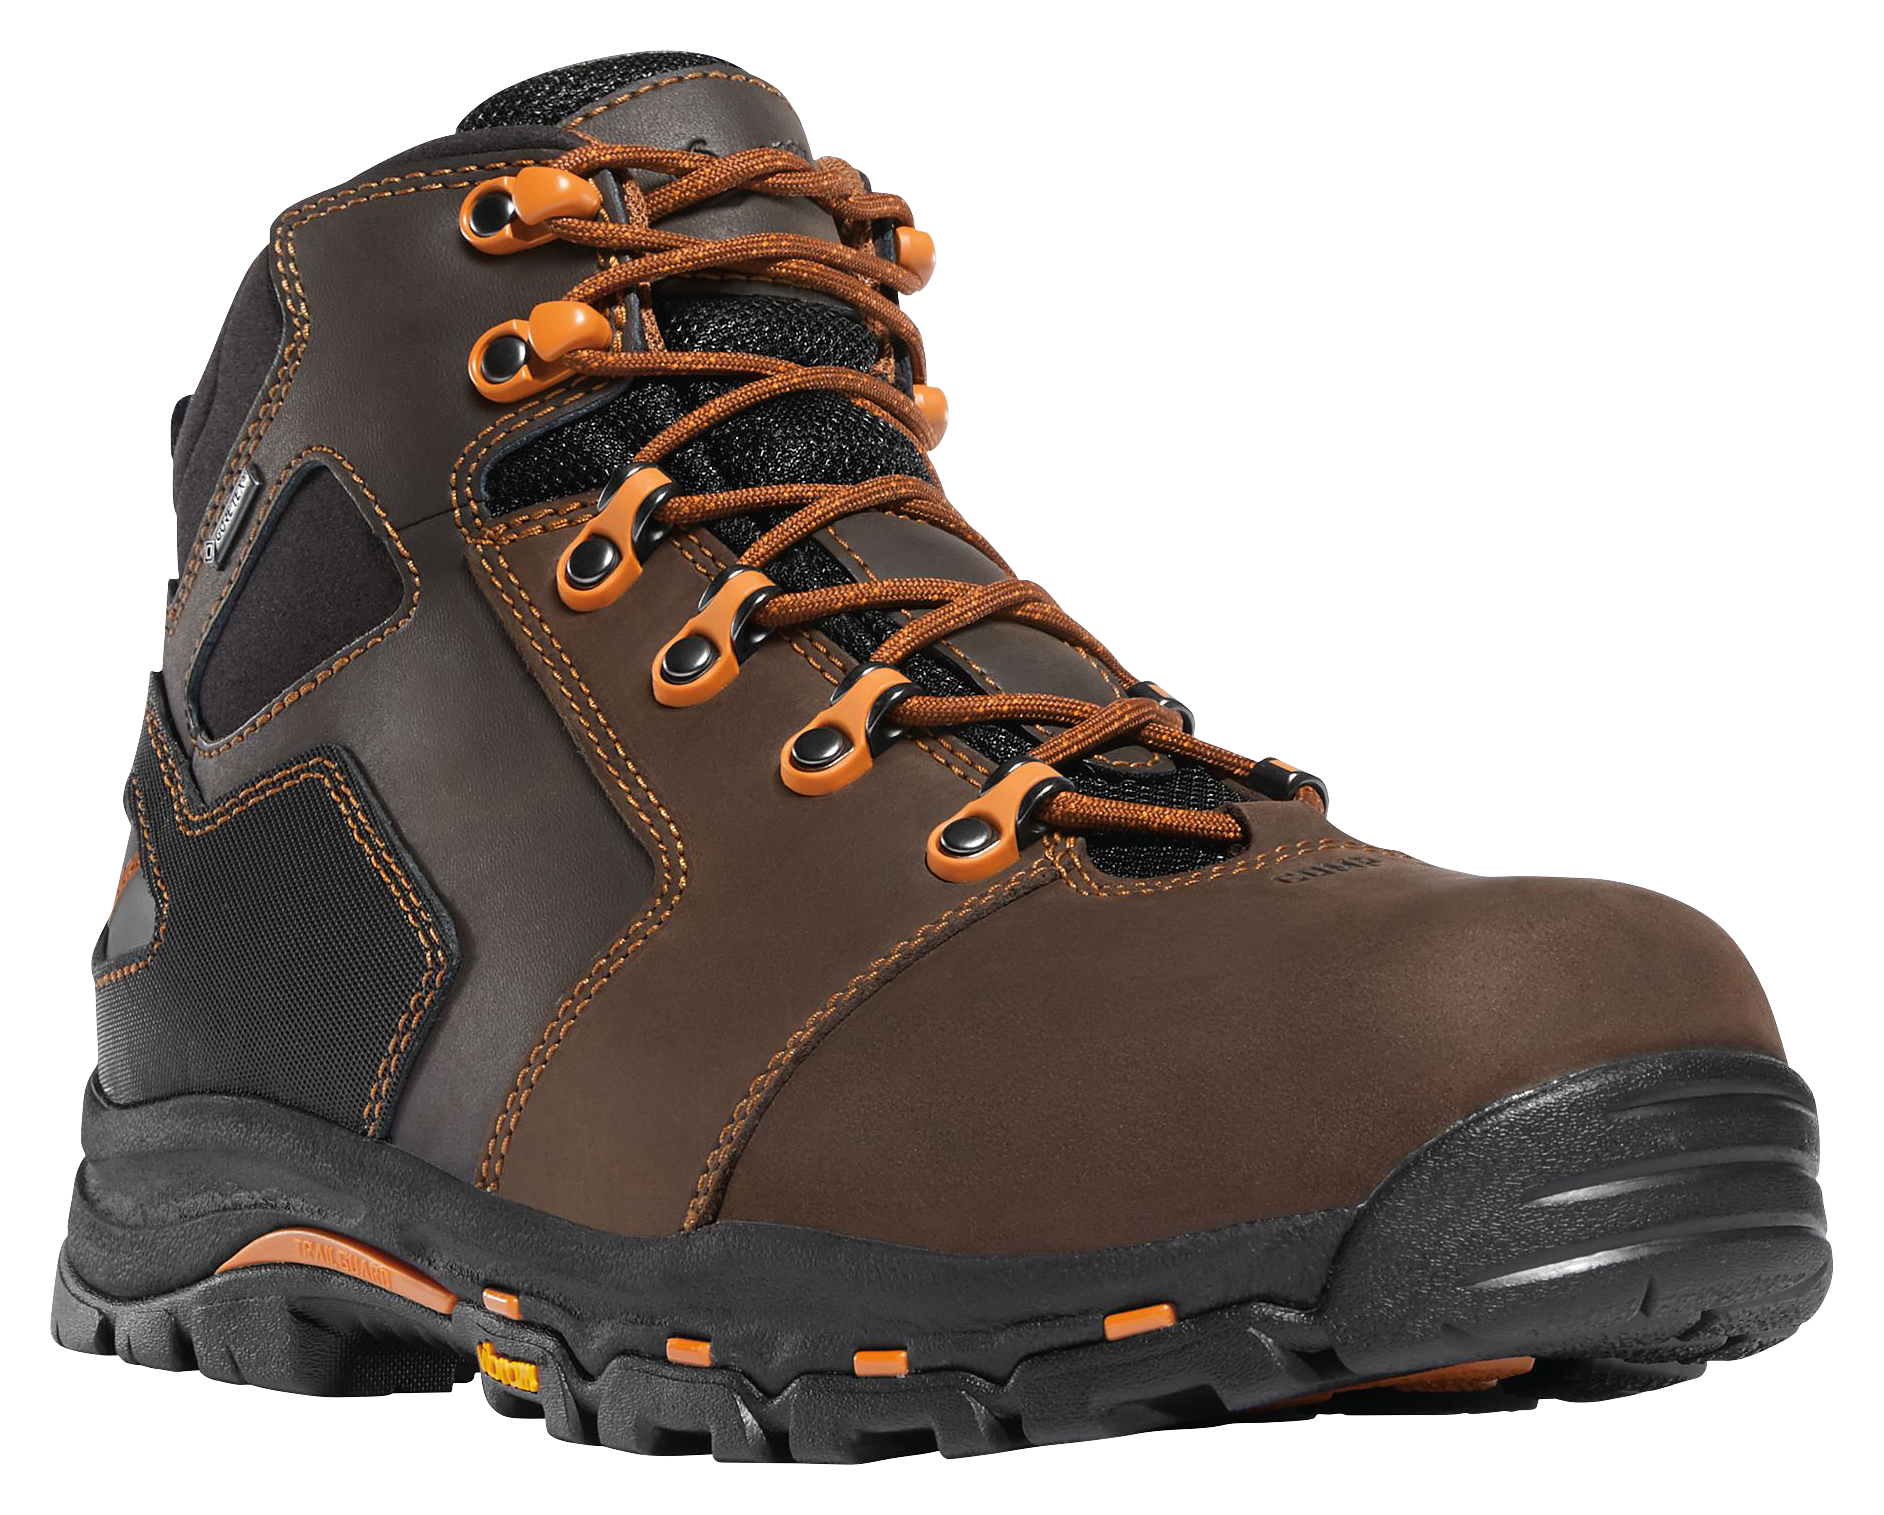 Danner Vicious 4.5'' GORE-TEX EH Work Boots for Men - Brown/Orange - 12W